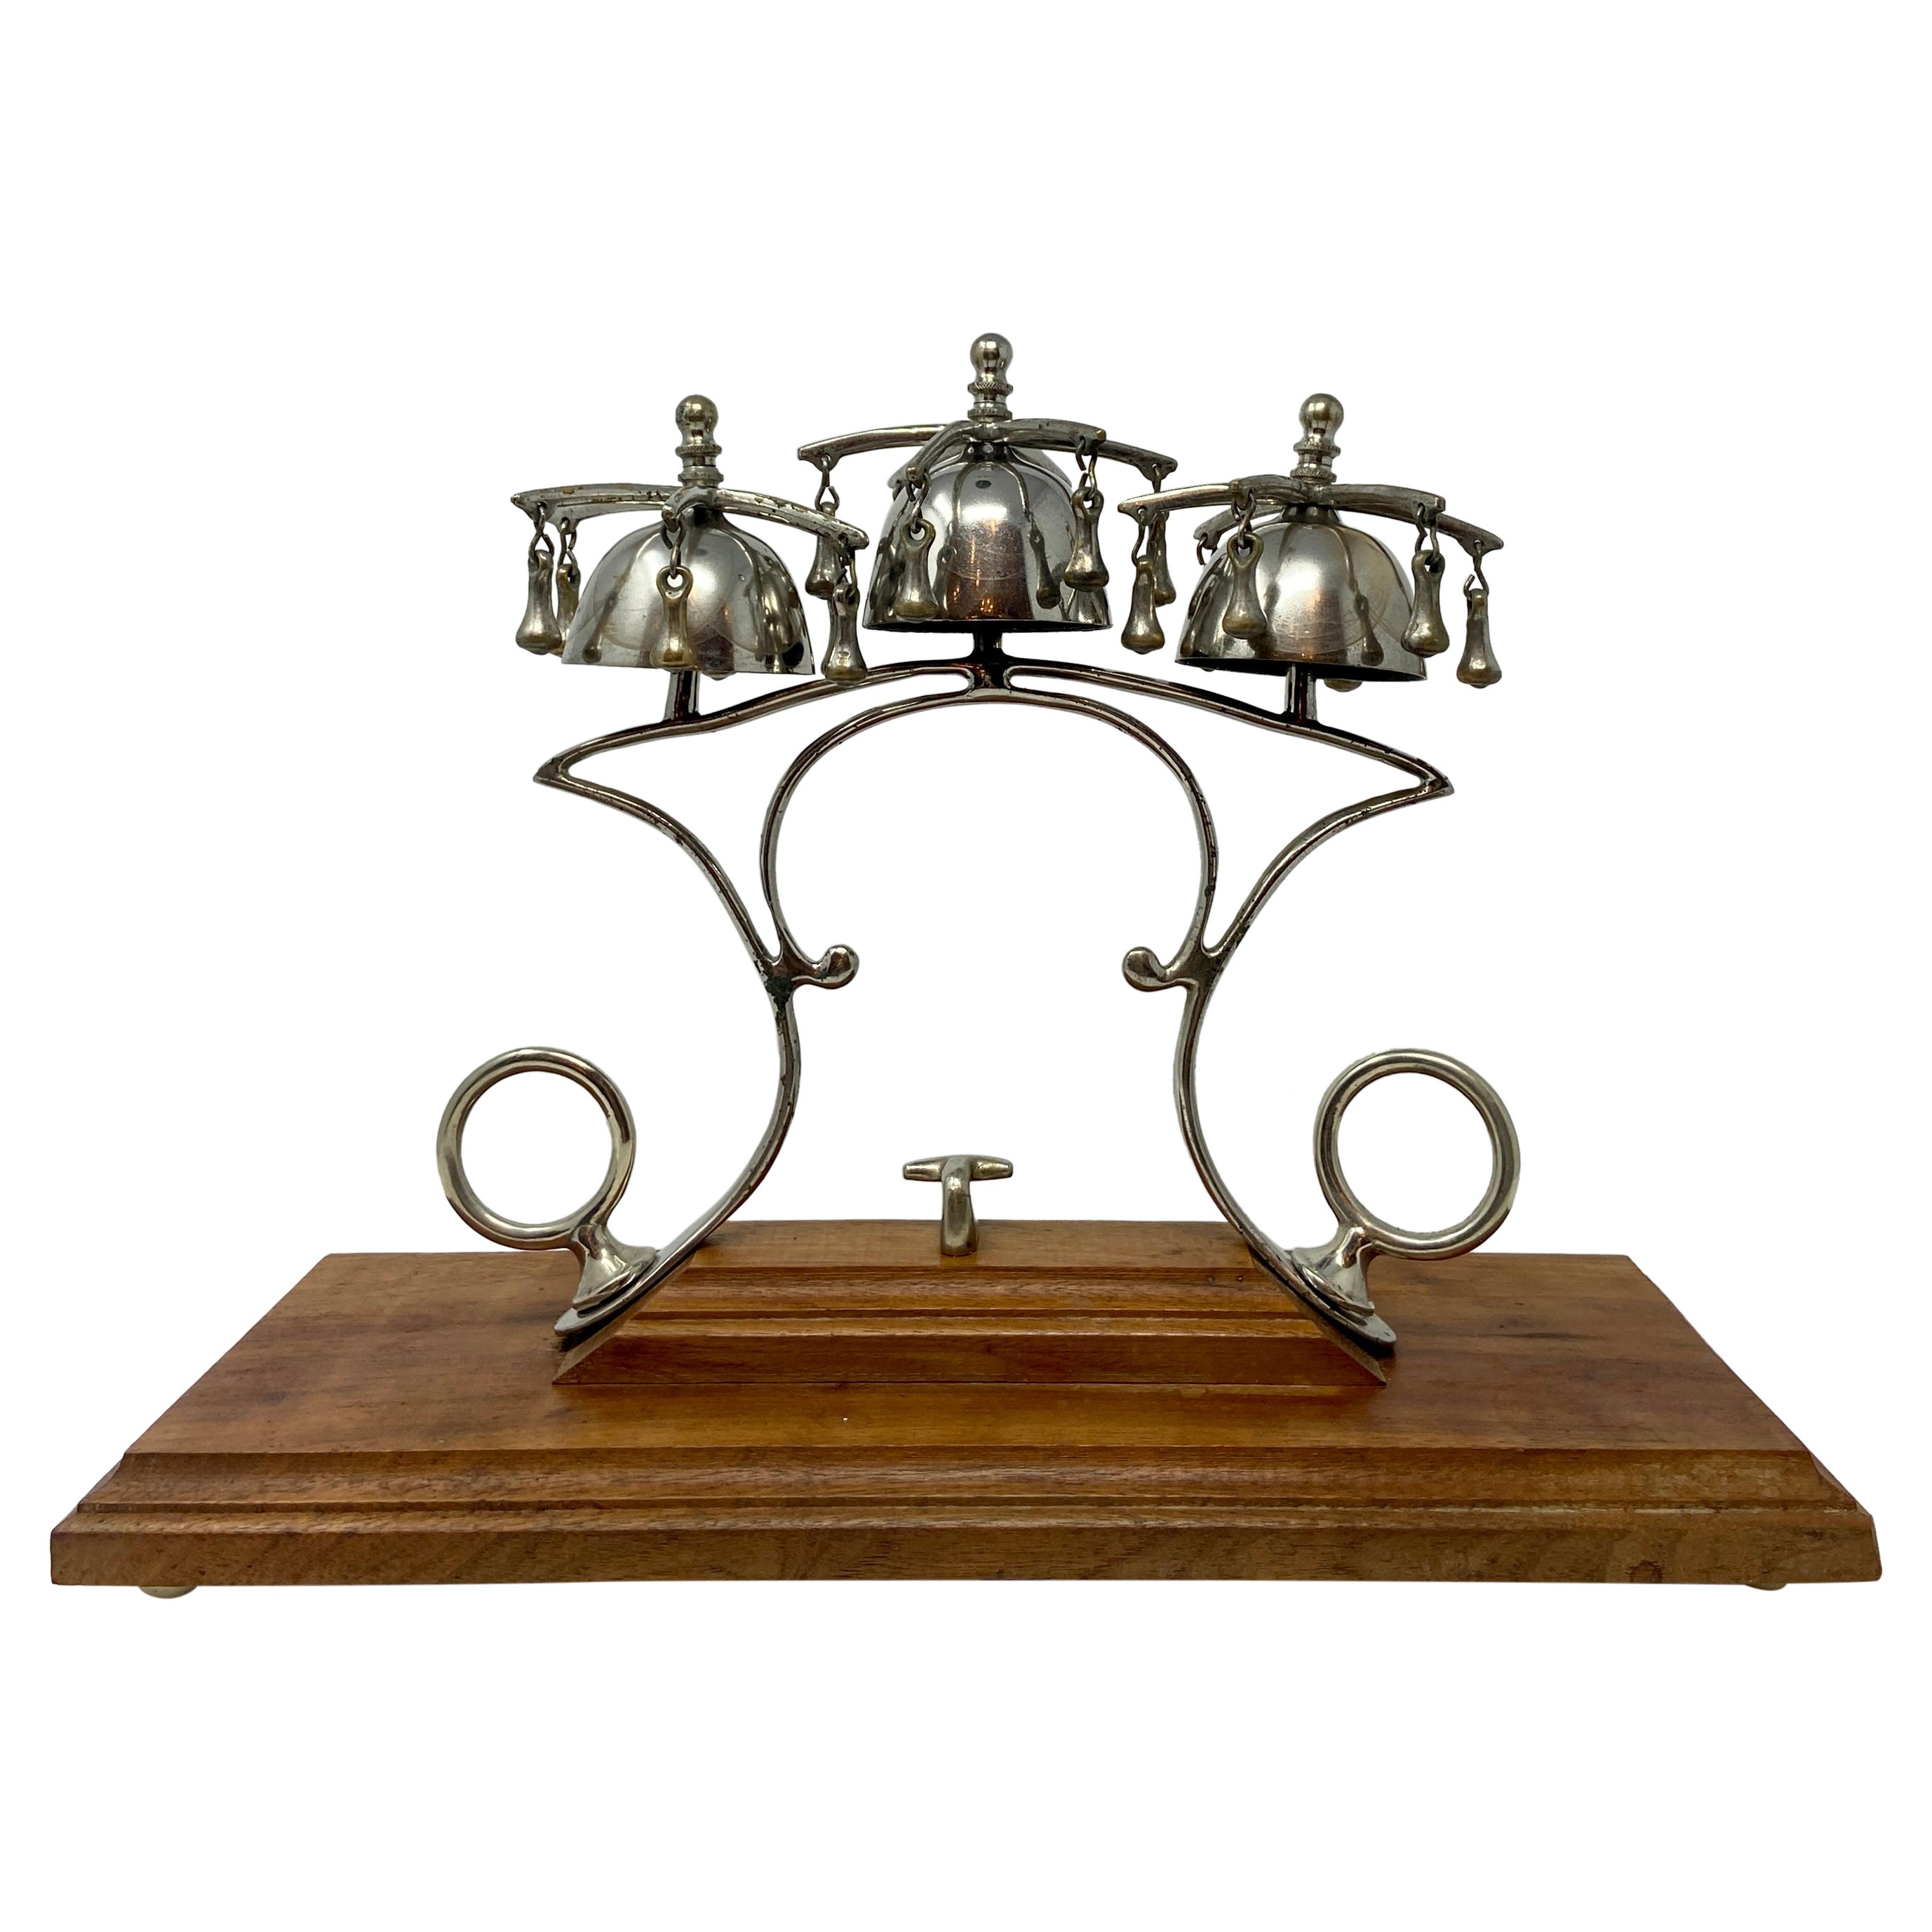 Antique Horse Hames Designed Sleigh Bells on Stand, Circa 1900's.